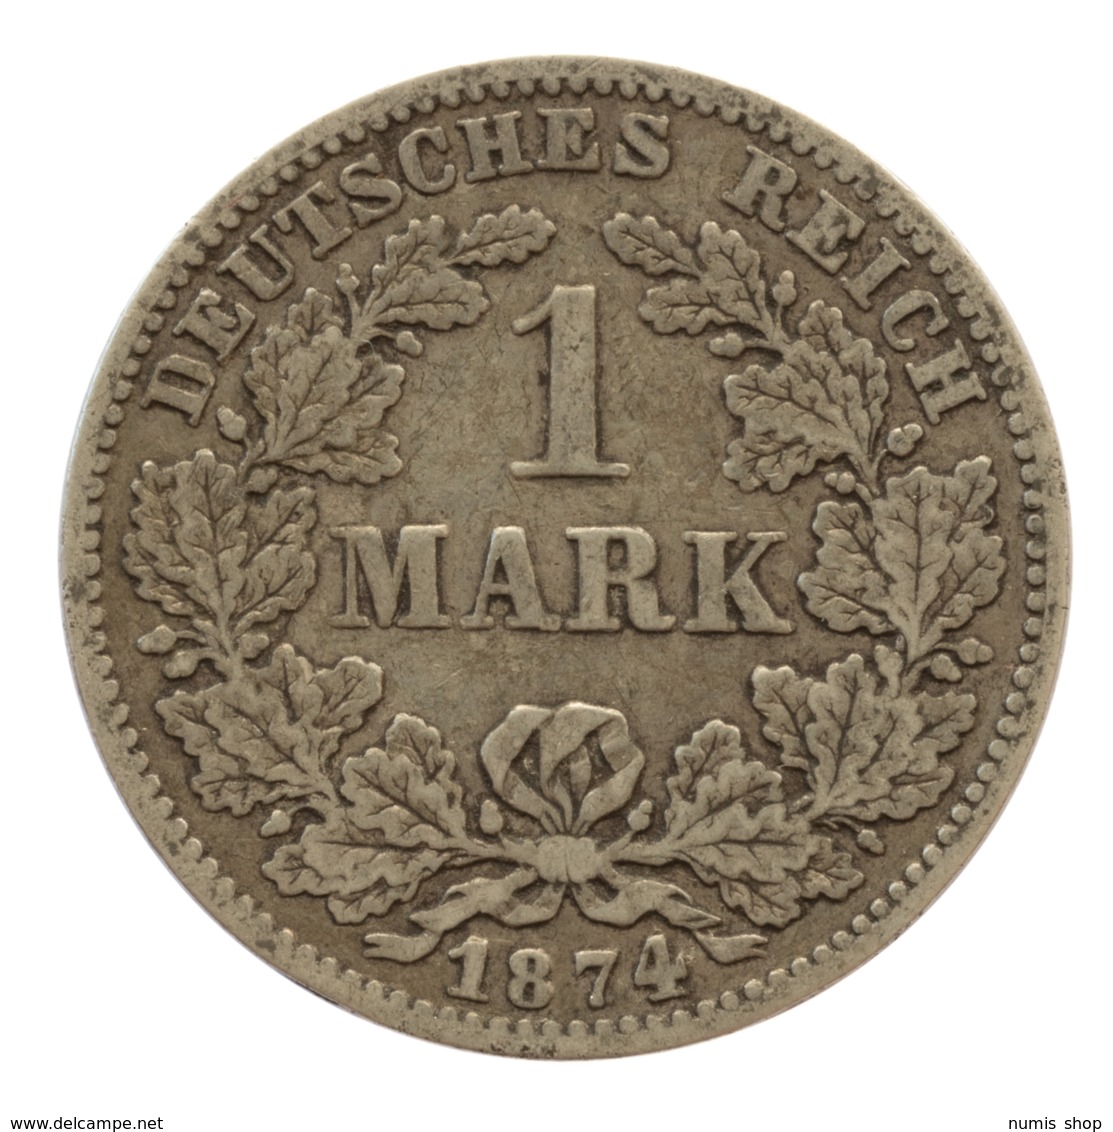 GERMANY - EMPIRE - 1 Mark - 1874 - G - Karlsruhe - Silver - #DE073 - 1 Mark